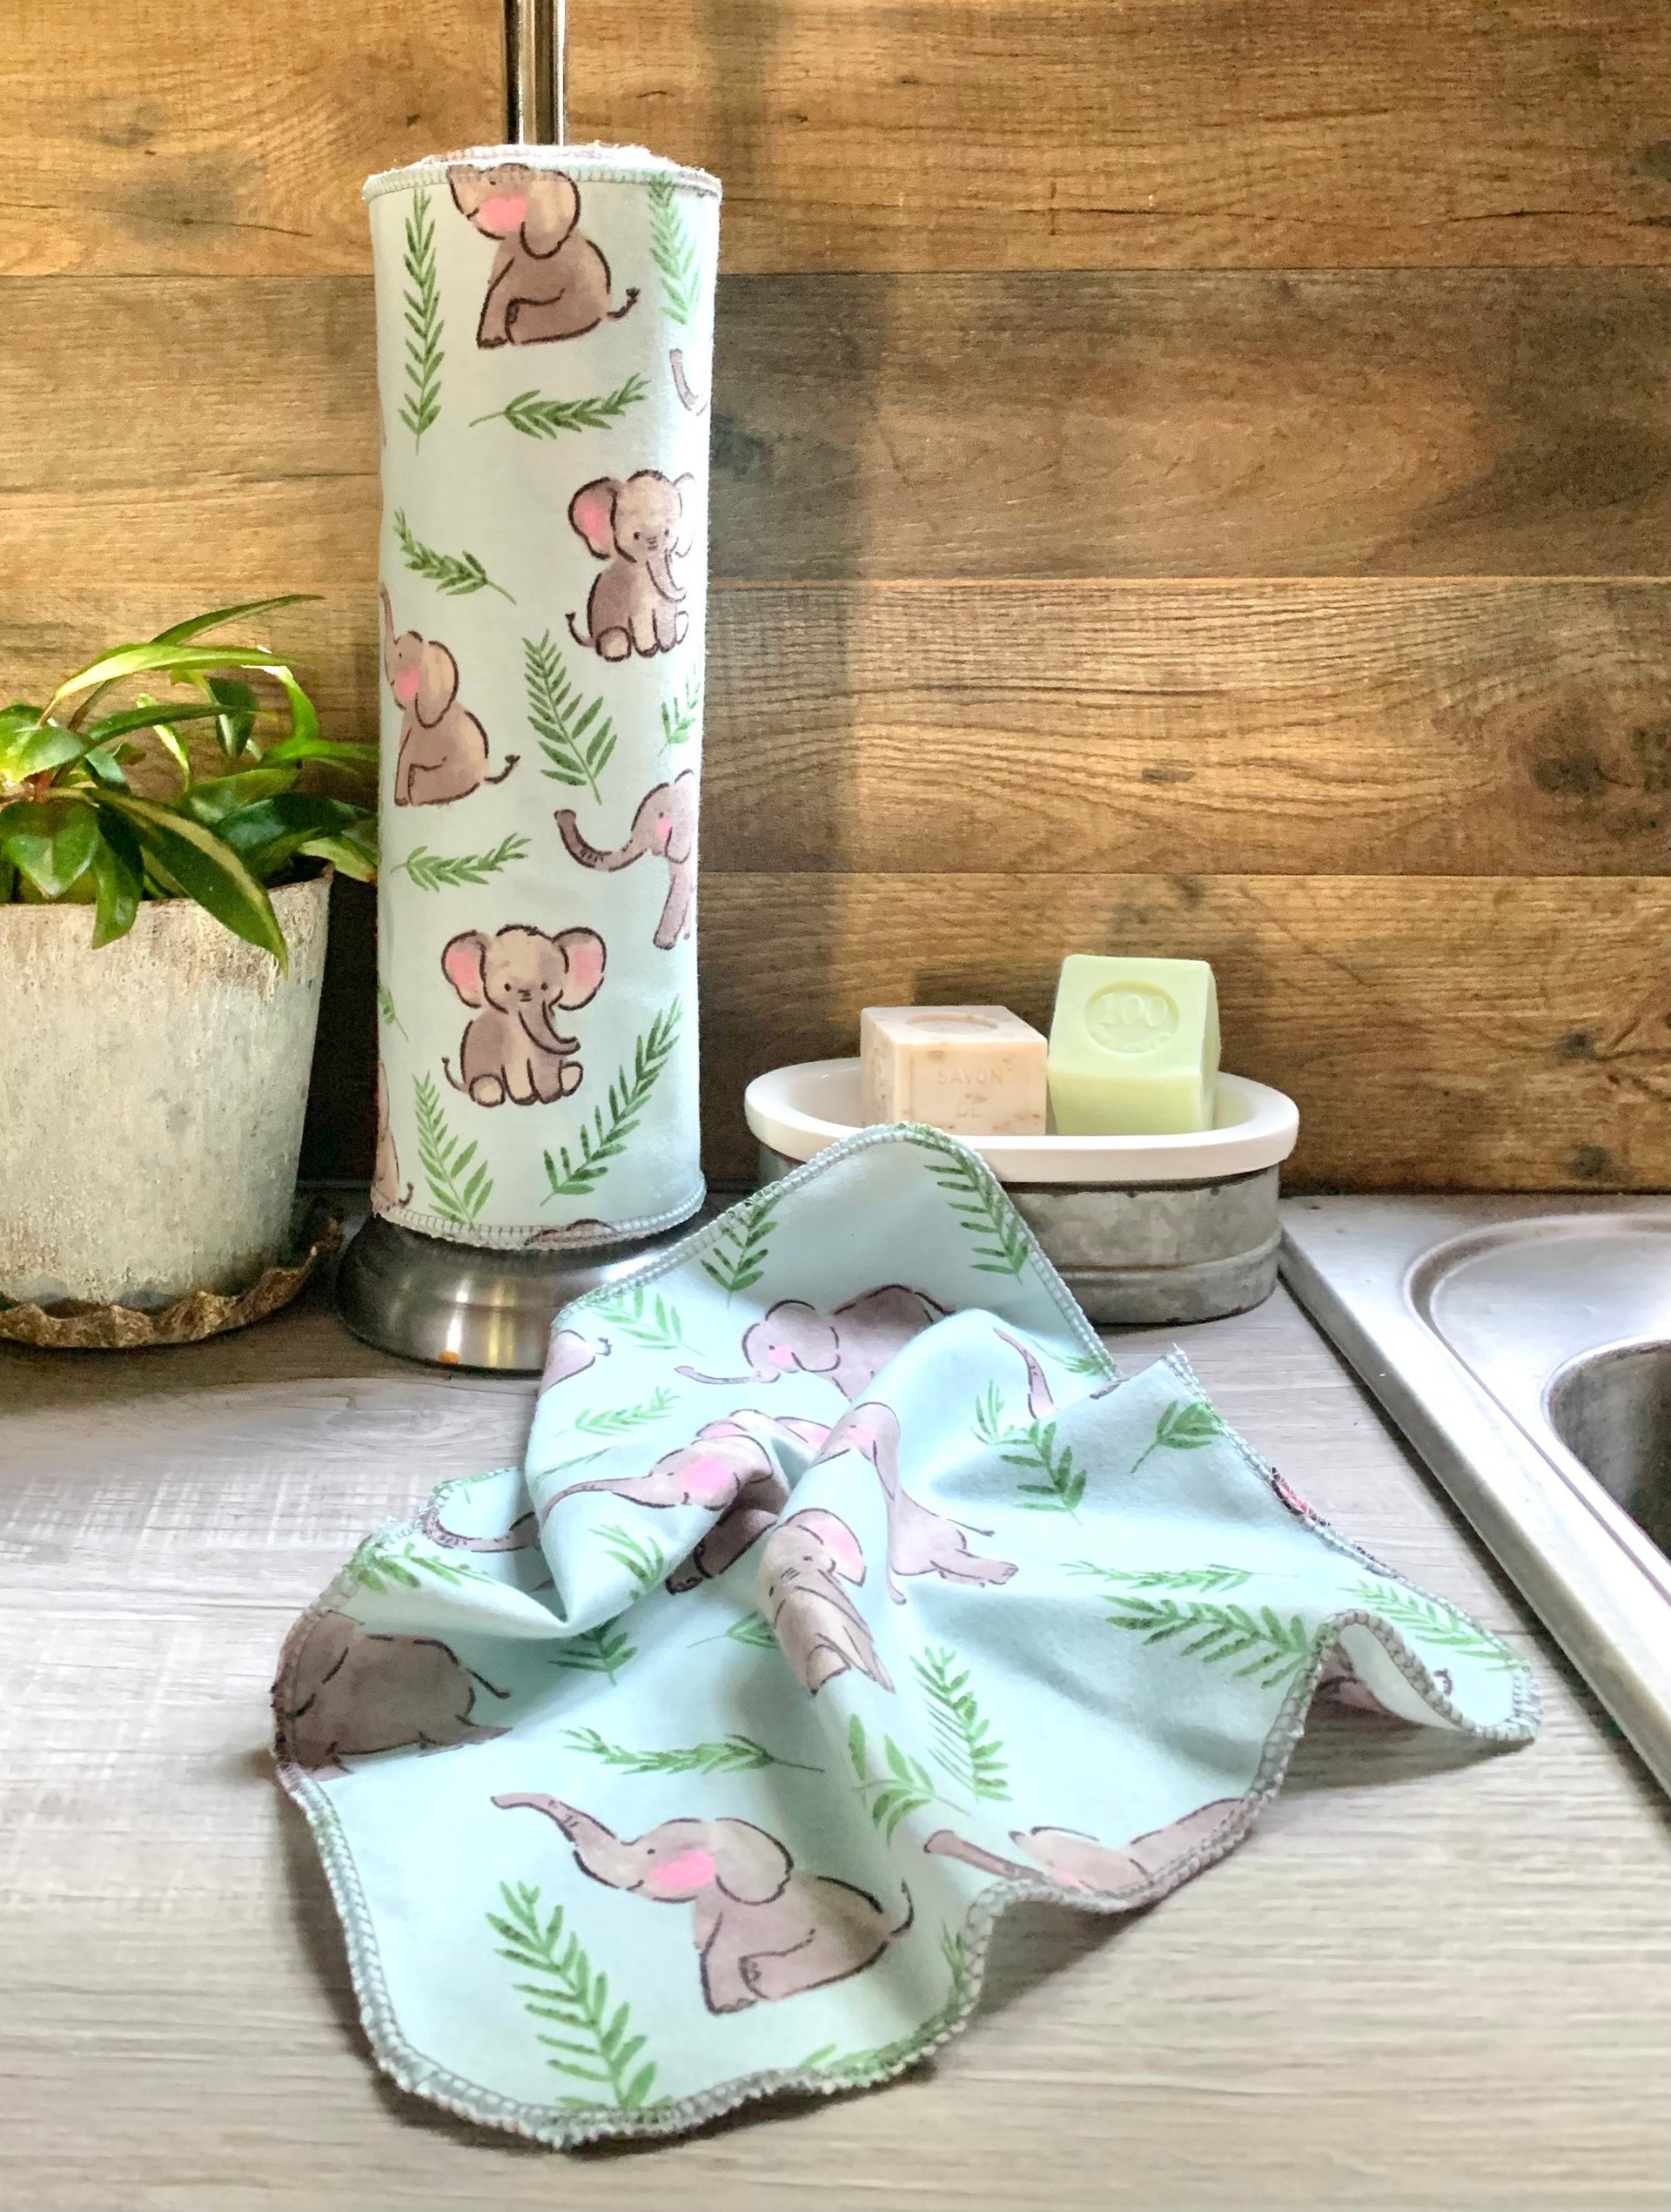 Beatrix Elephant (Series 1) Paperless Towels || Unpaper Towels || Eco Sustainable